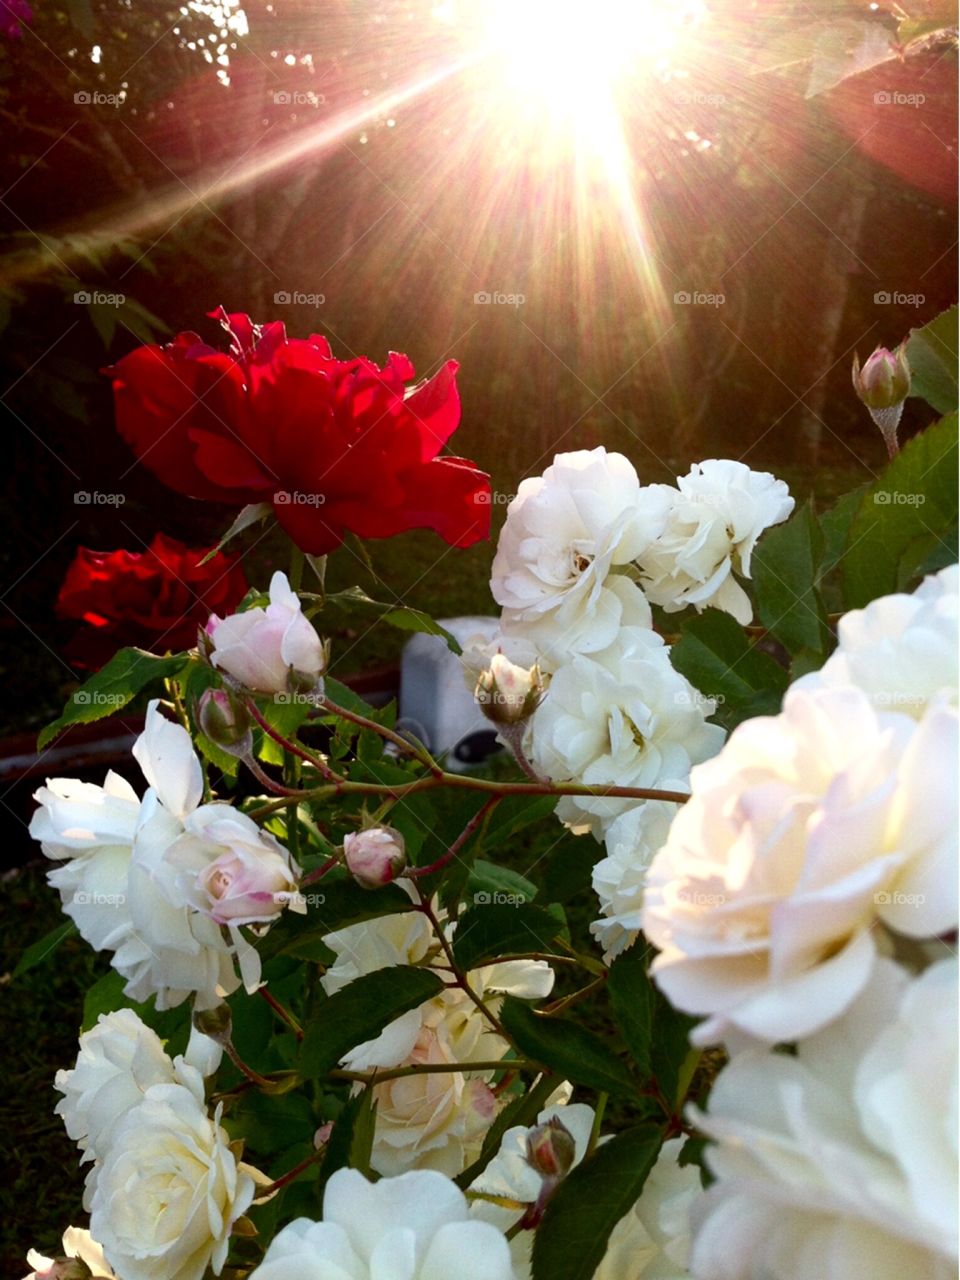 FOAP MISSIONS - 🇺🇸 The sun's rays illuminating the flowers! May the glow of light inspire our daily lives. / 🇧🇷 Os raios do sol iluminando as flores! Que o brilho da luz inspire nossa vida cotidianamente. 